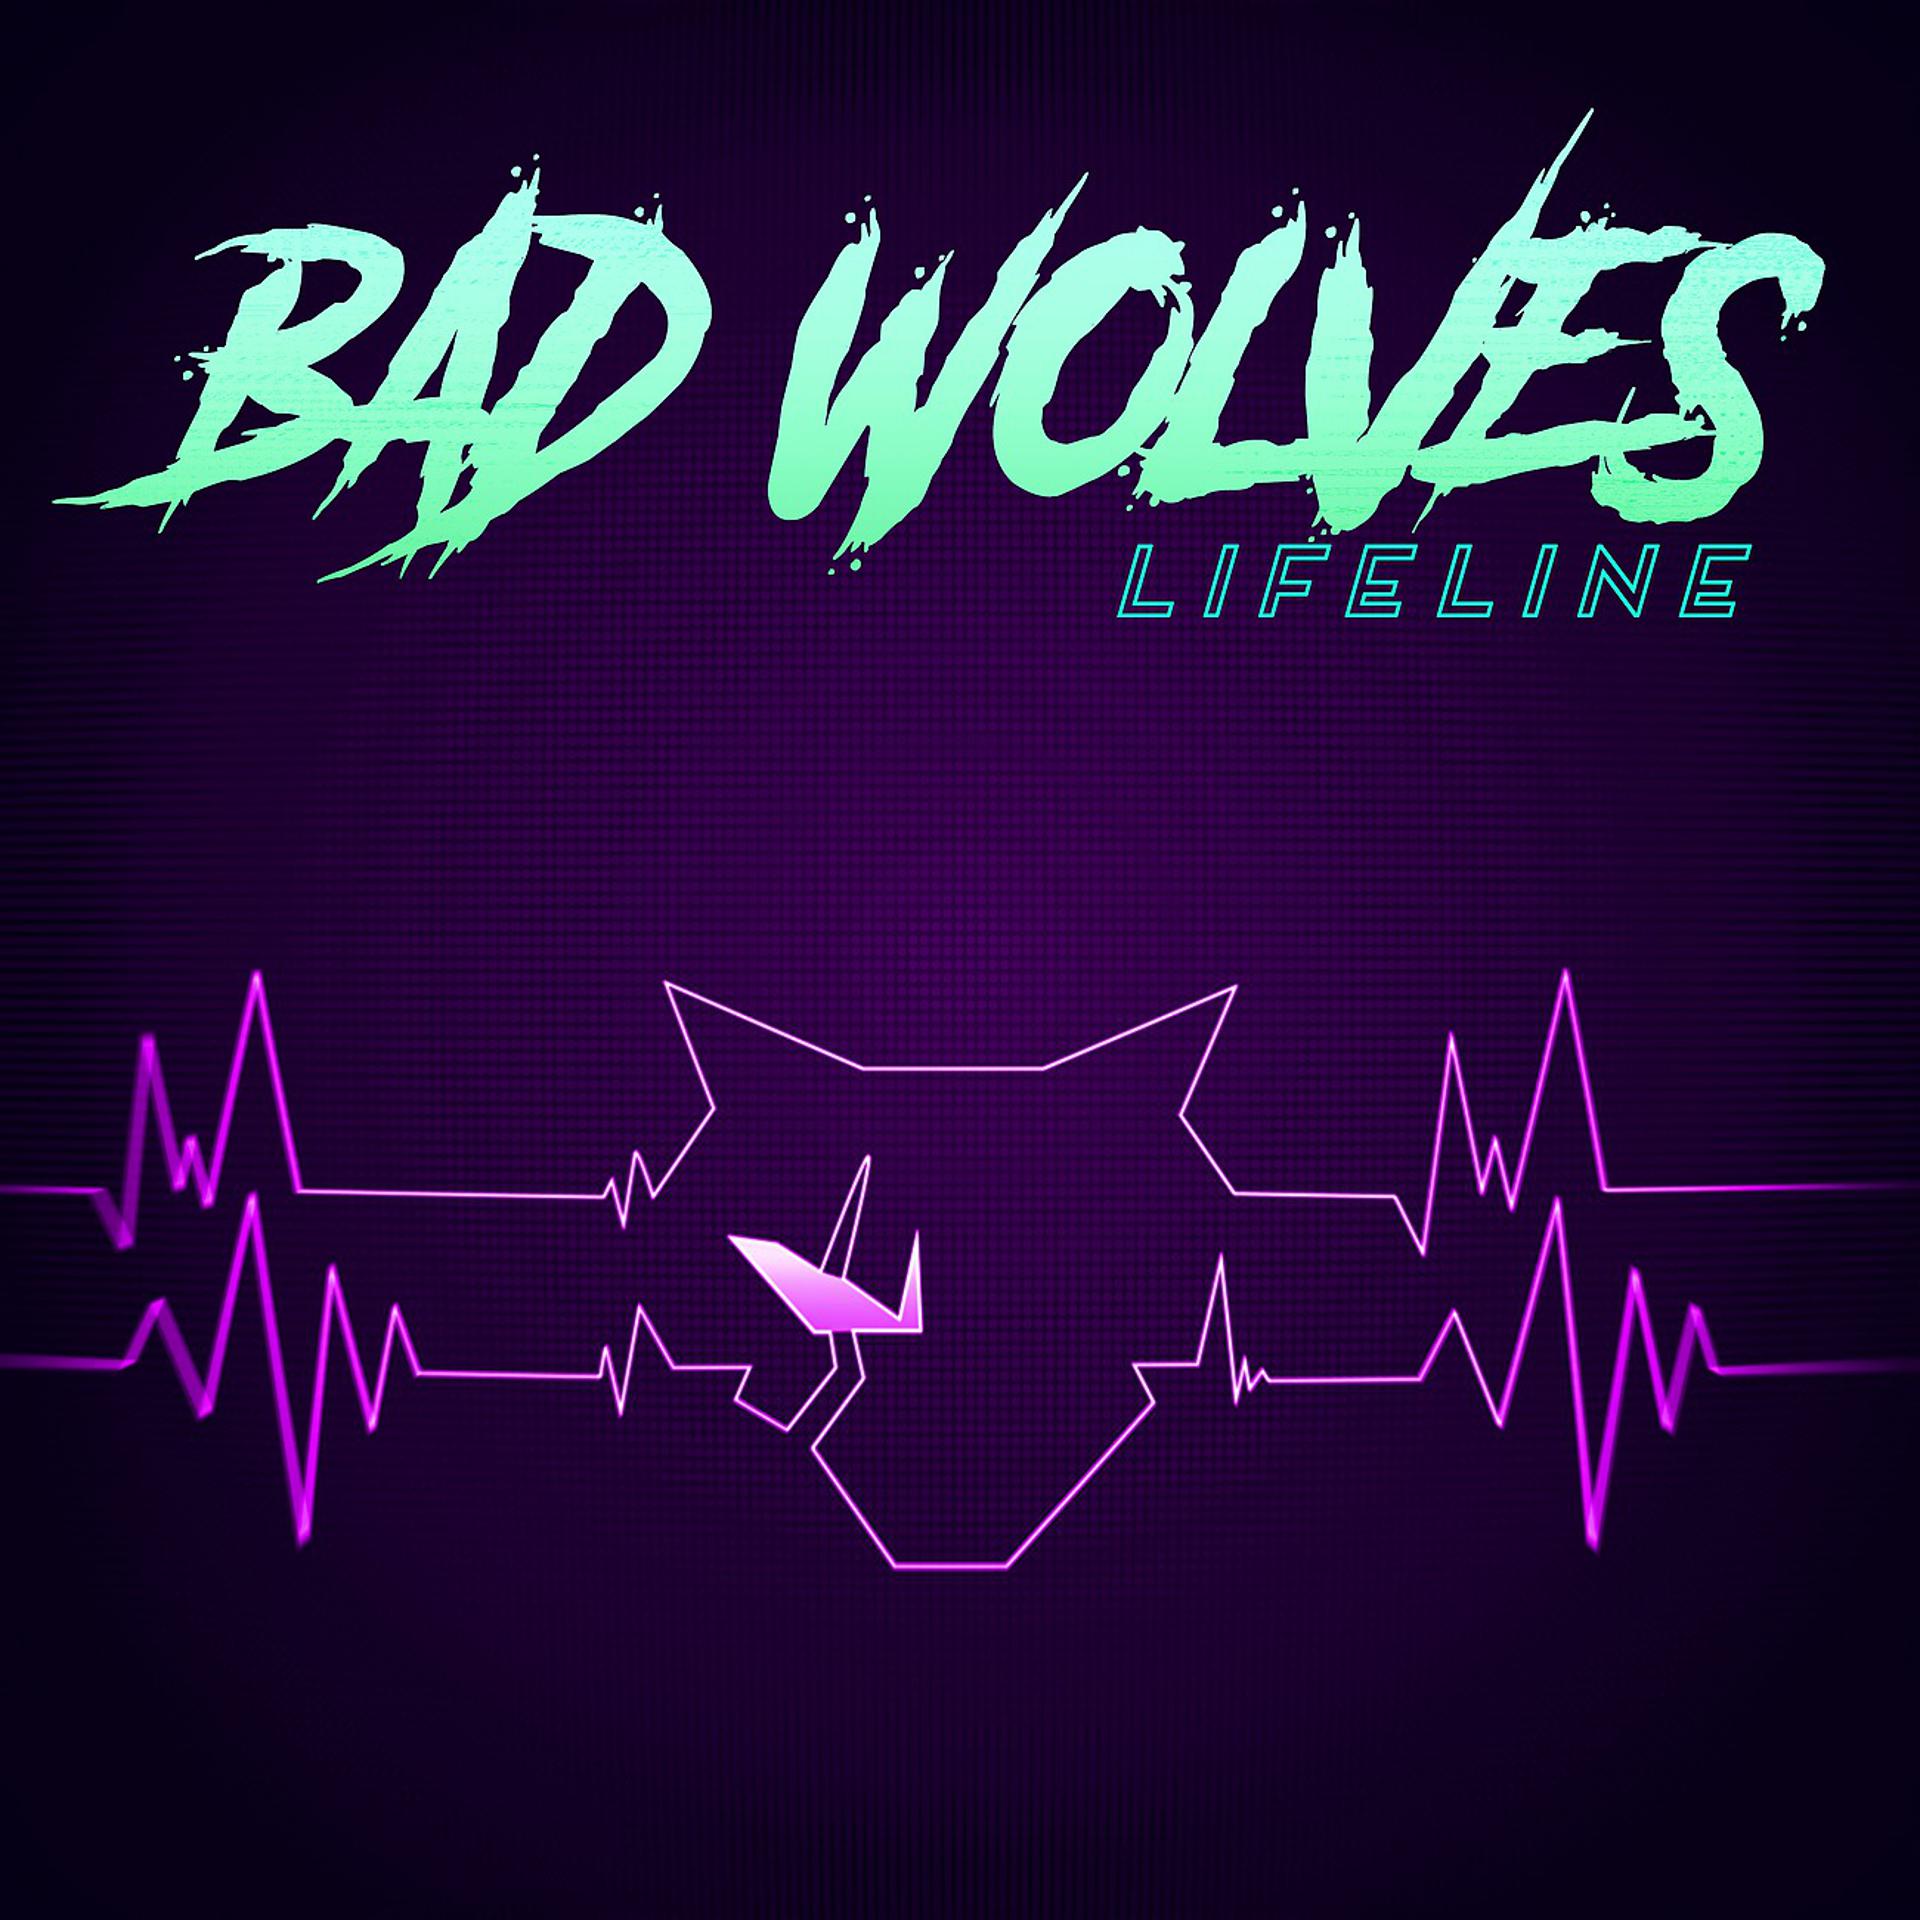 Bad wolves песни. Группа Bad Wolves. Bad Wolves обложки альбомов. Bad Wolves Lifeline. Bad Wolves New album 2023.